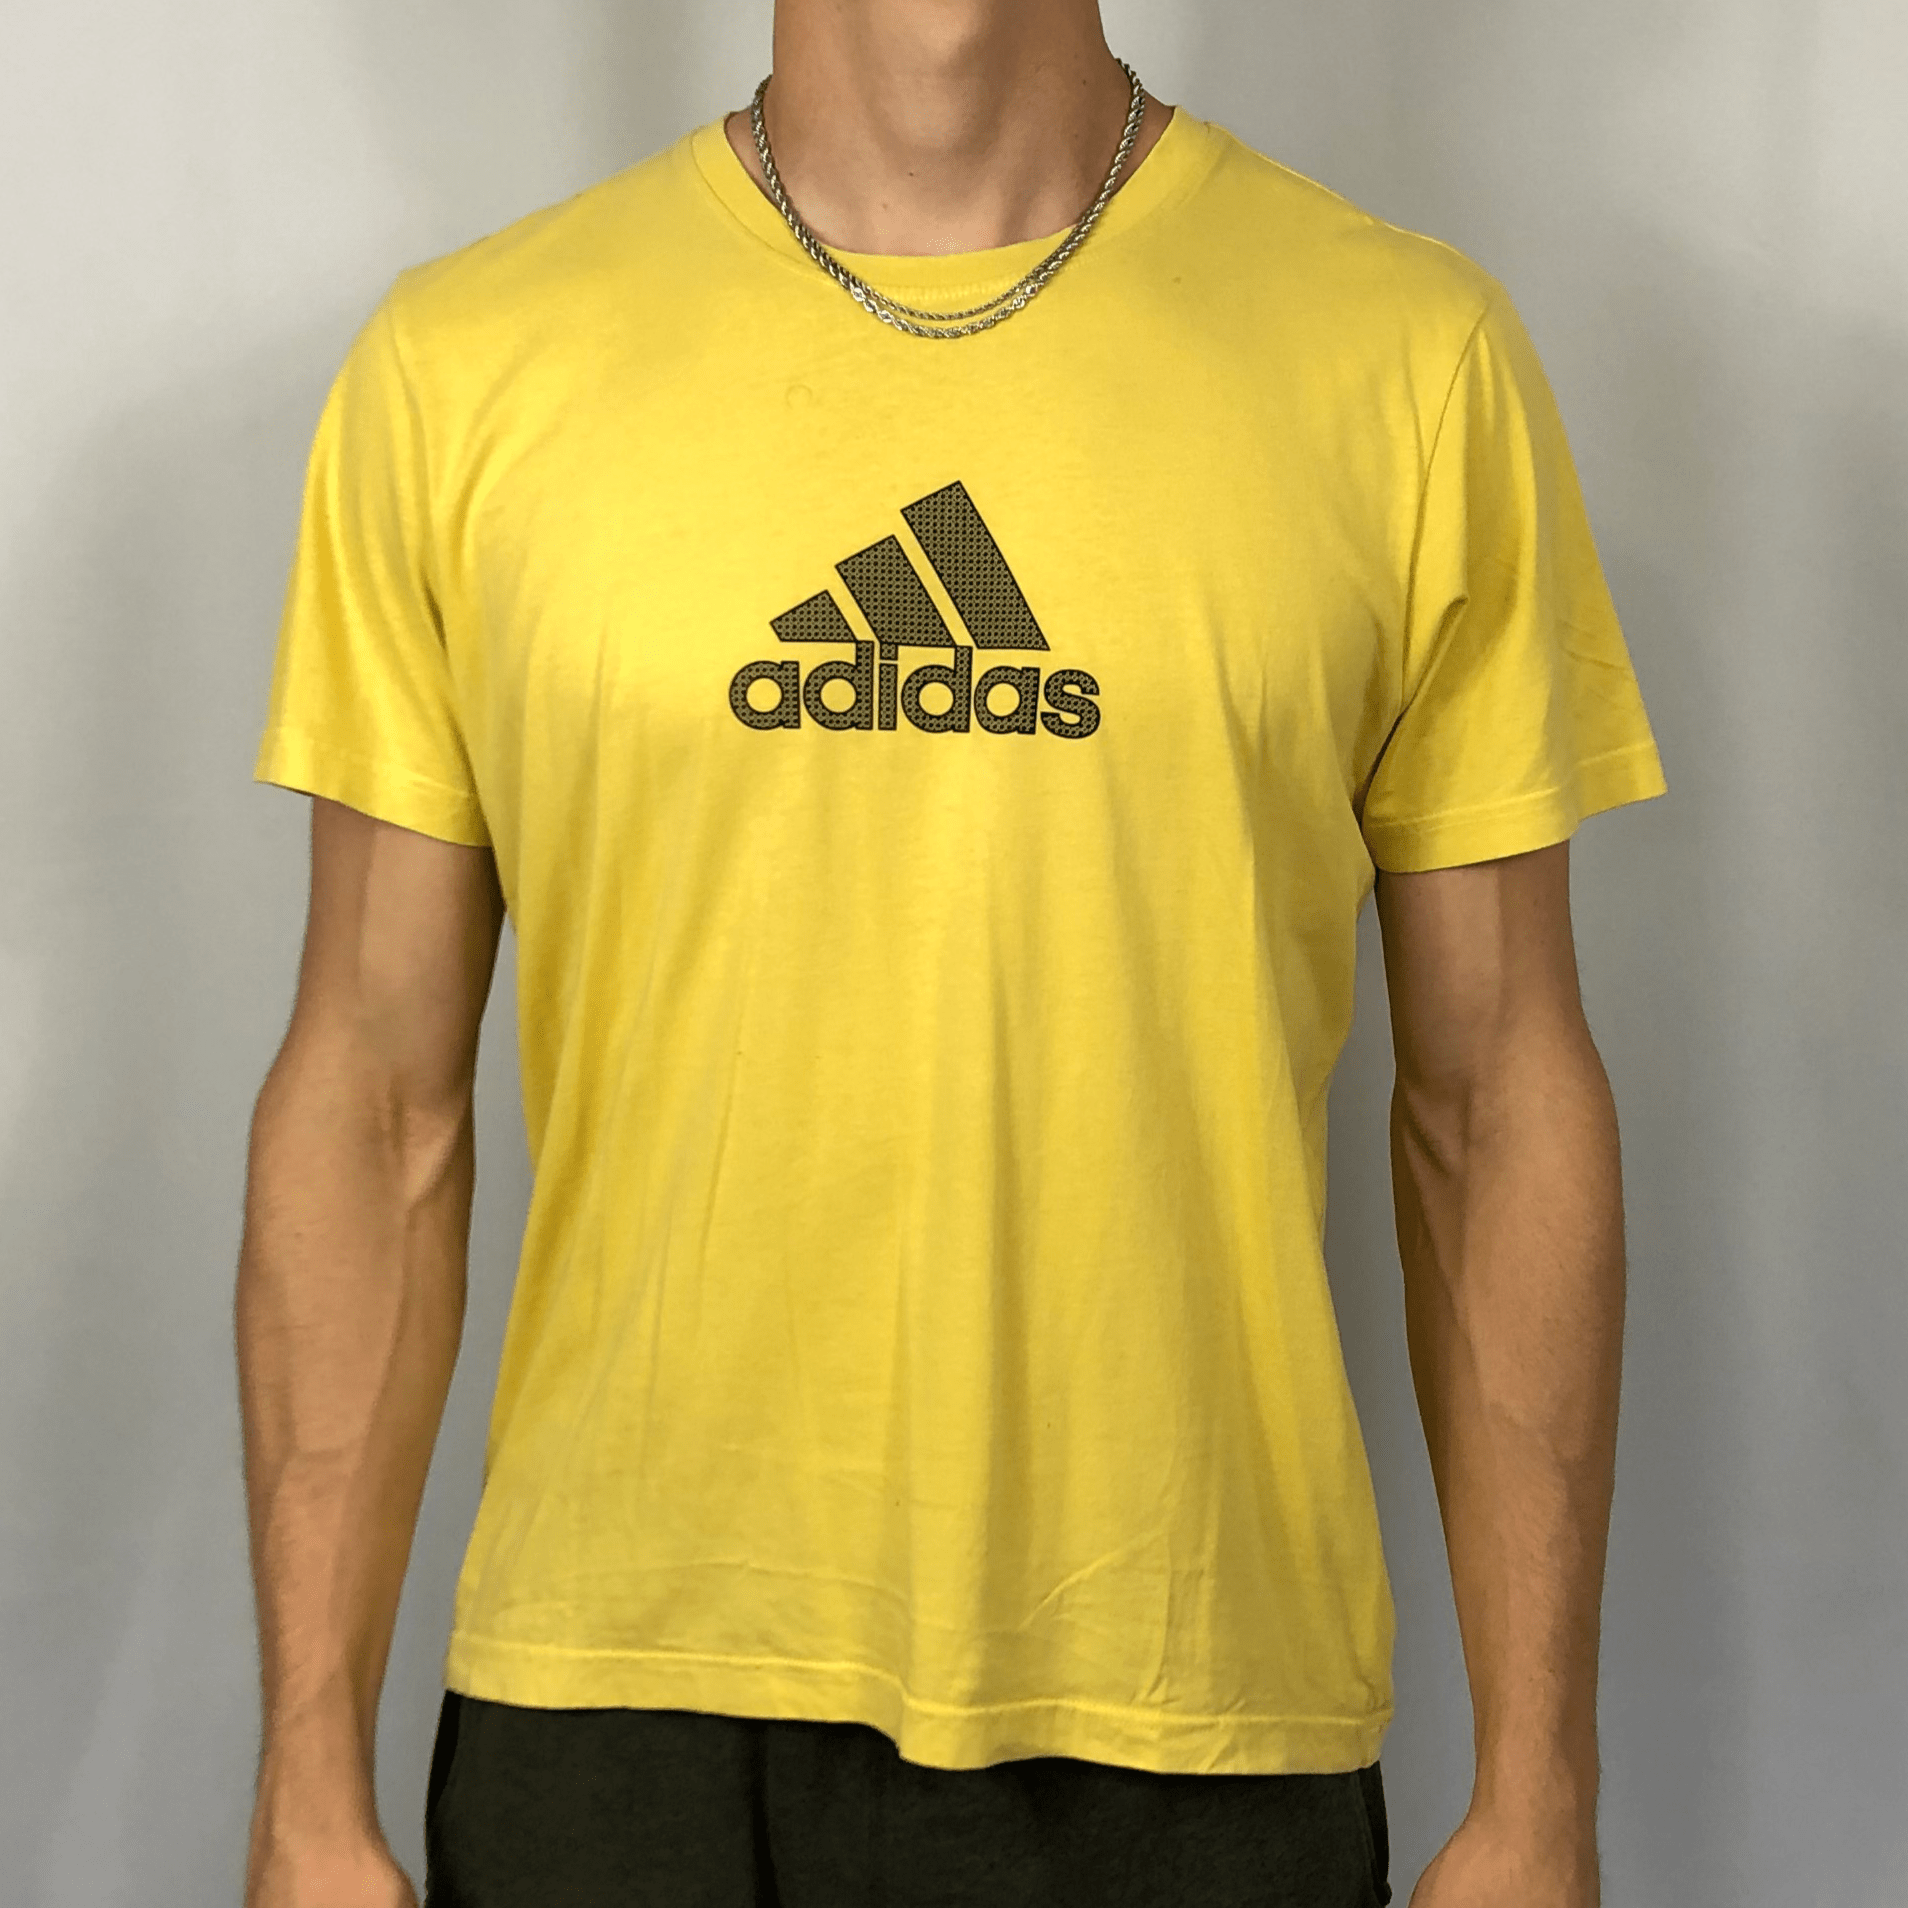 Vintage Adidas Printed Logo T-Shirt - Medium/Large - Vintique Clothing